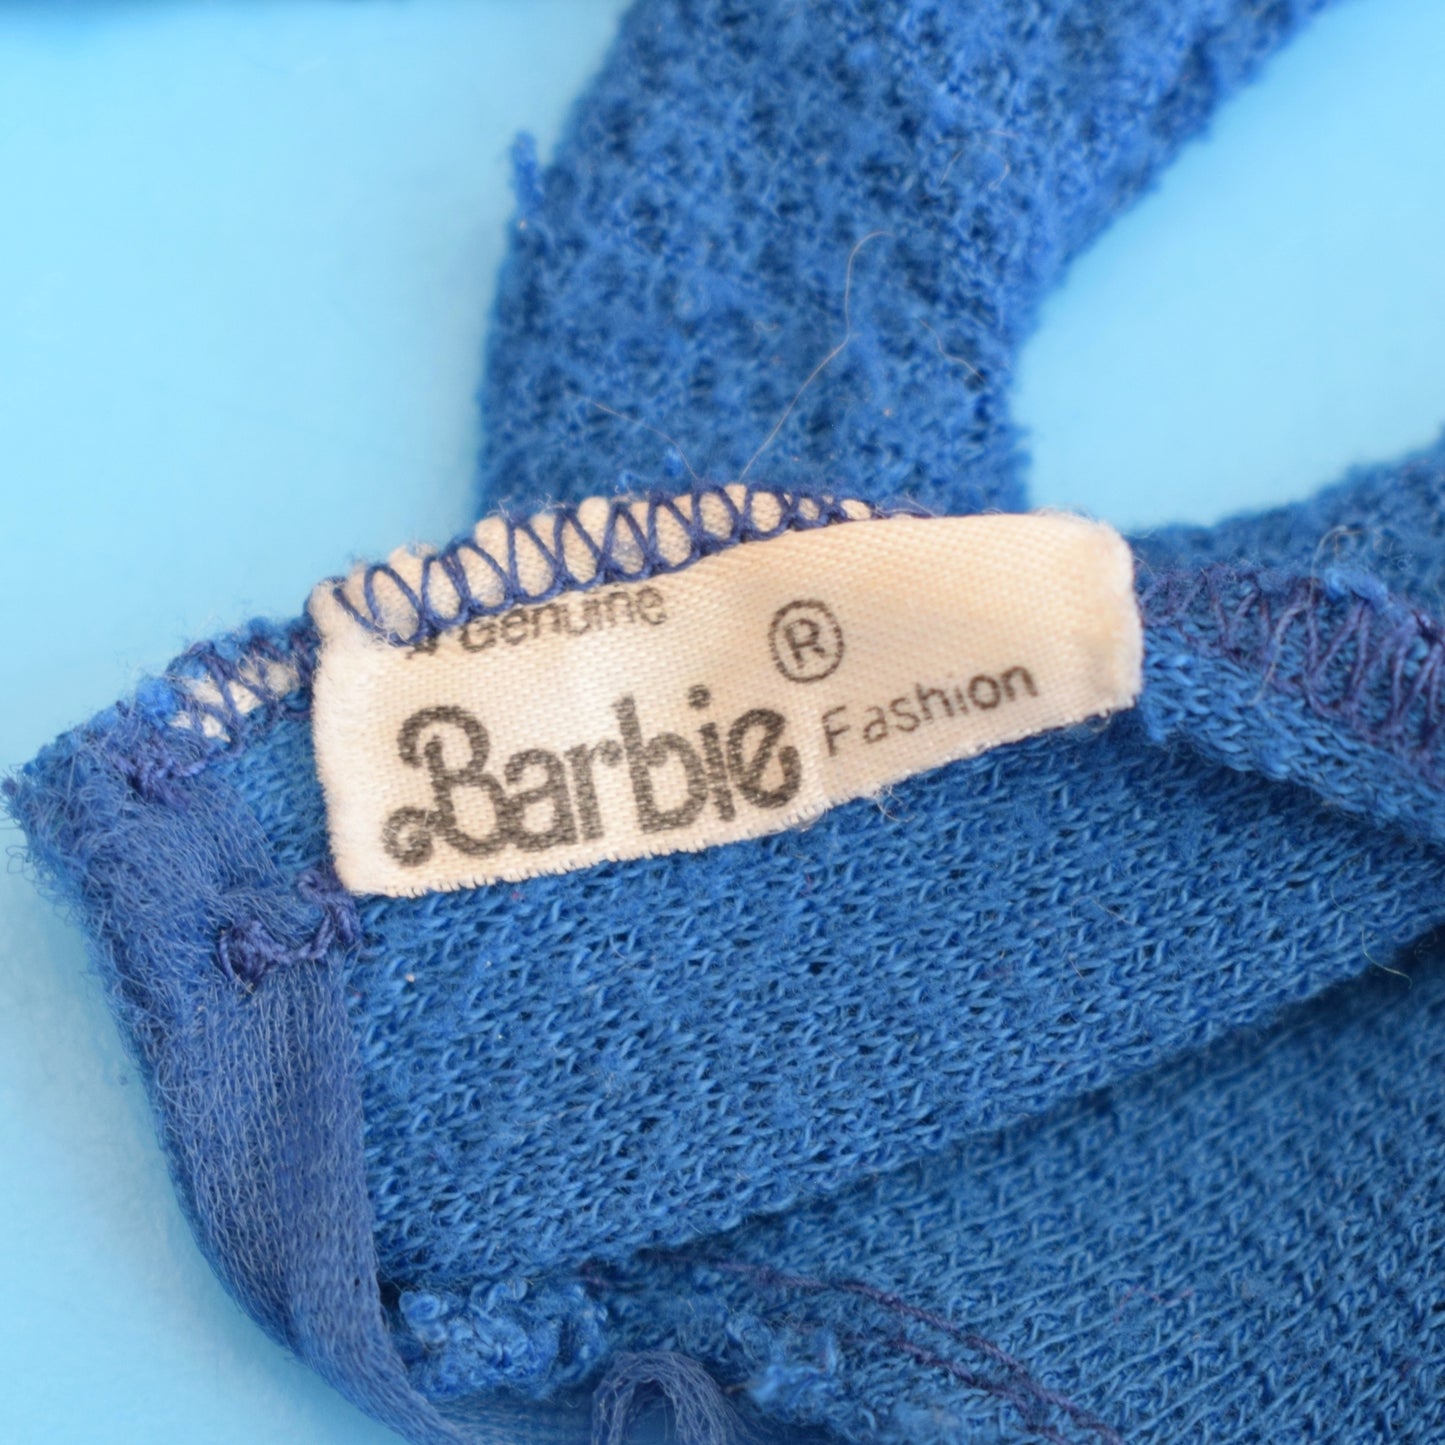 Vintage 1970s Barbie Outfit - Blue Textured